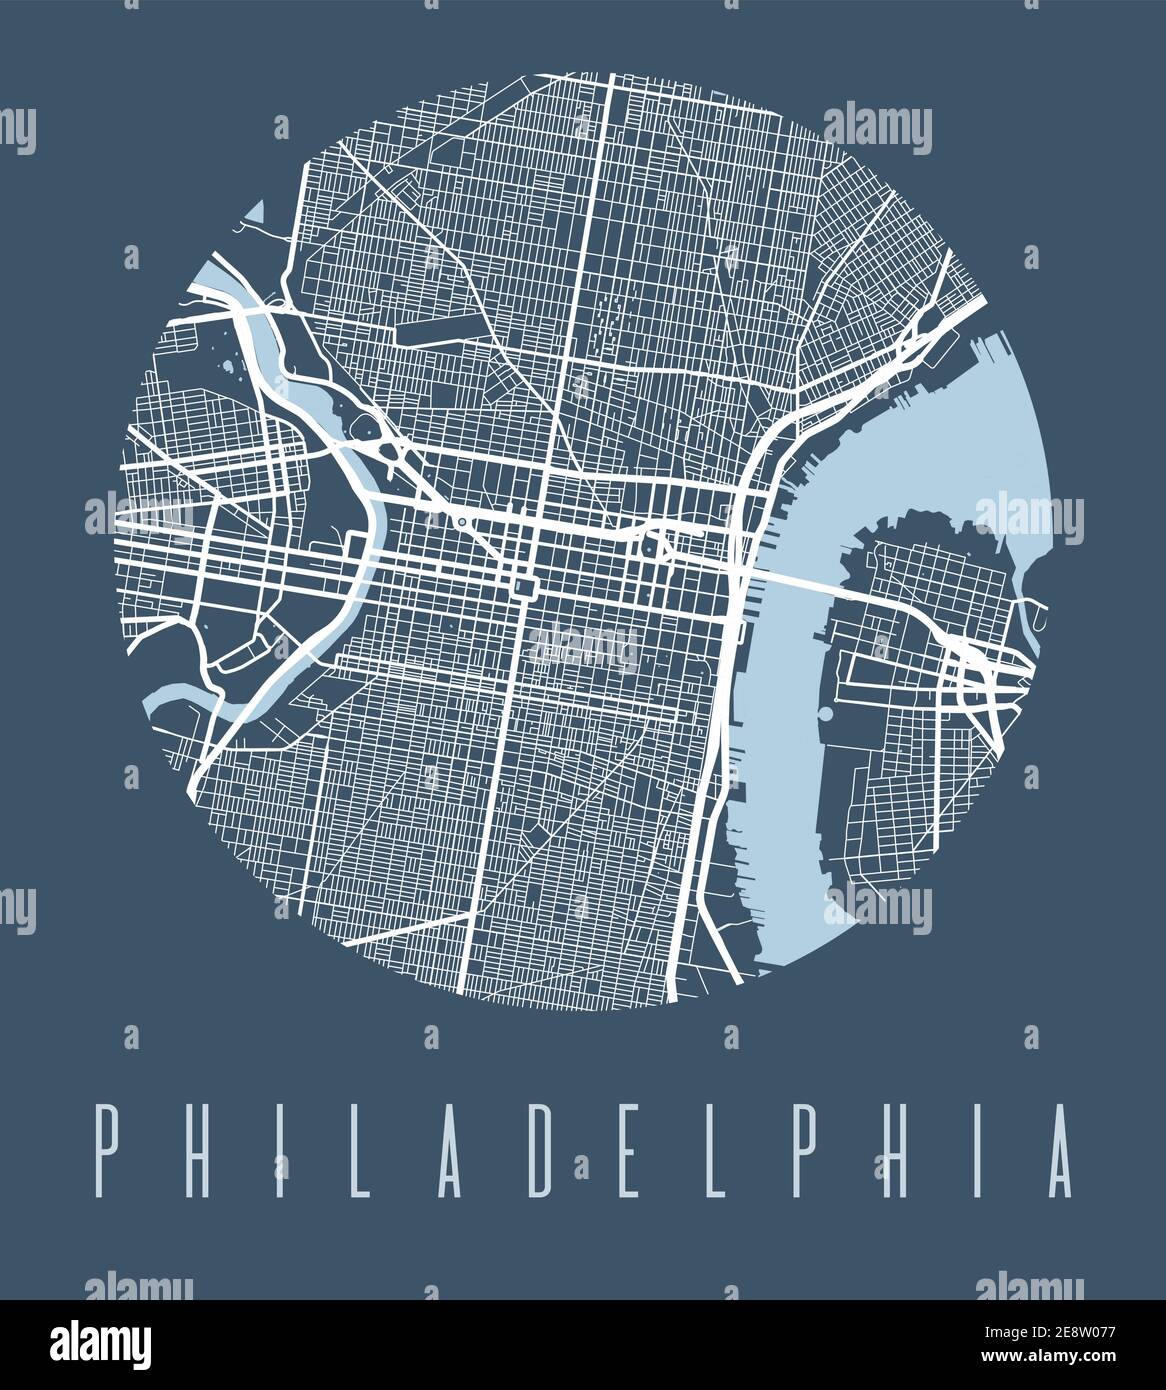 Philadelphia map poster. Decorative design street map of Philadelphia city. Cityscape aria panorama silhouette aerial view, typography style. Land, ri Stock Vector